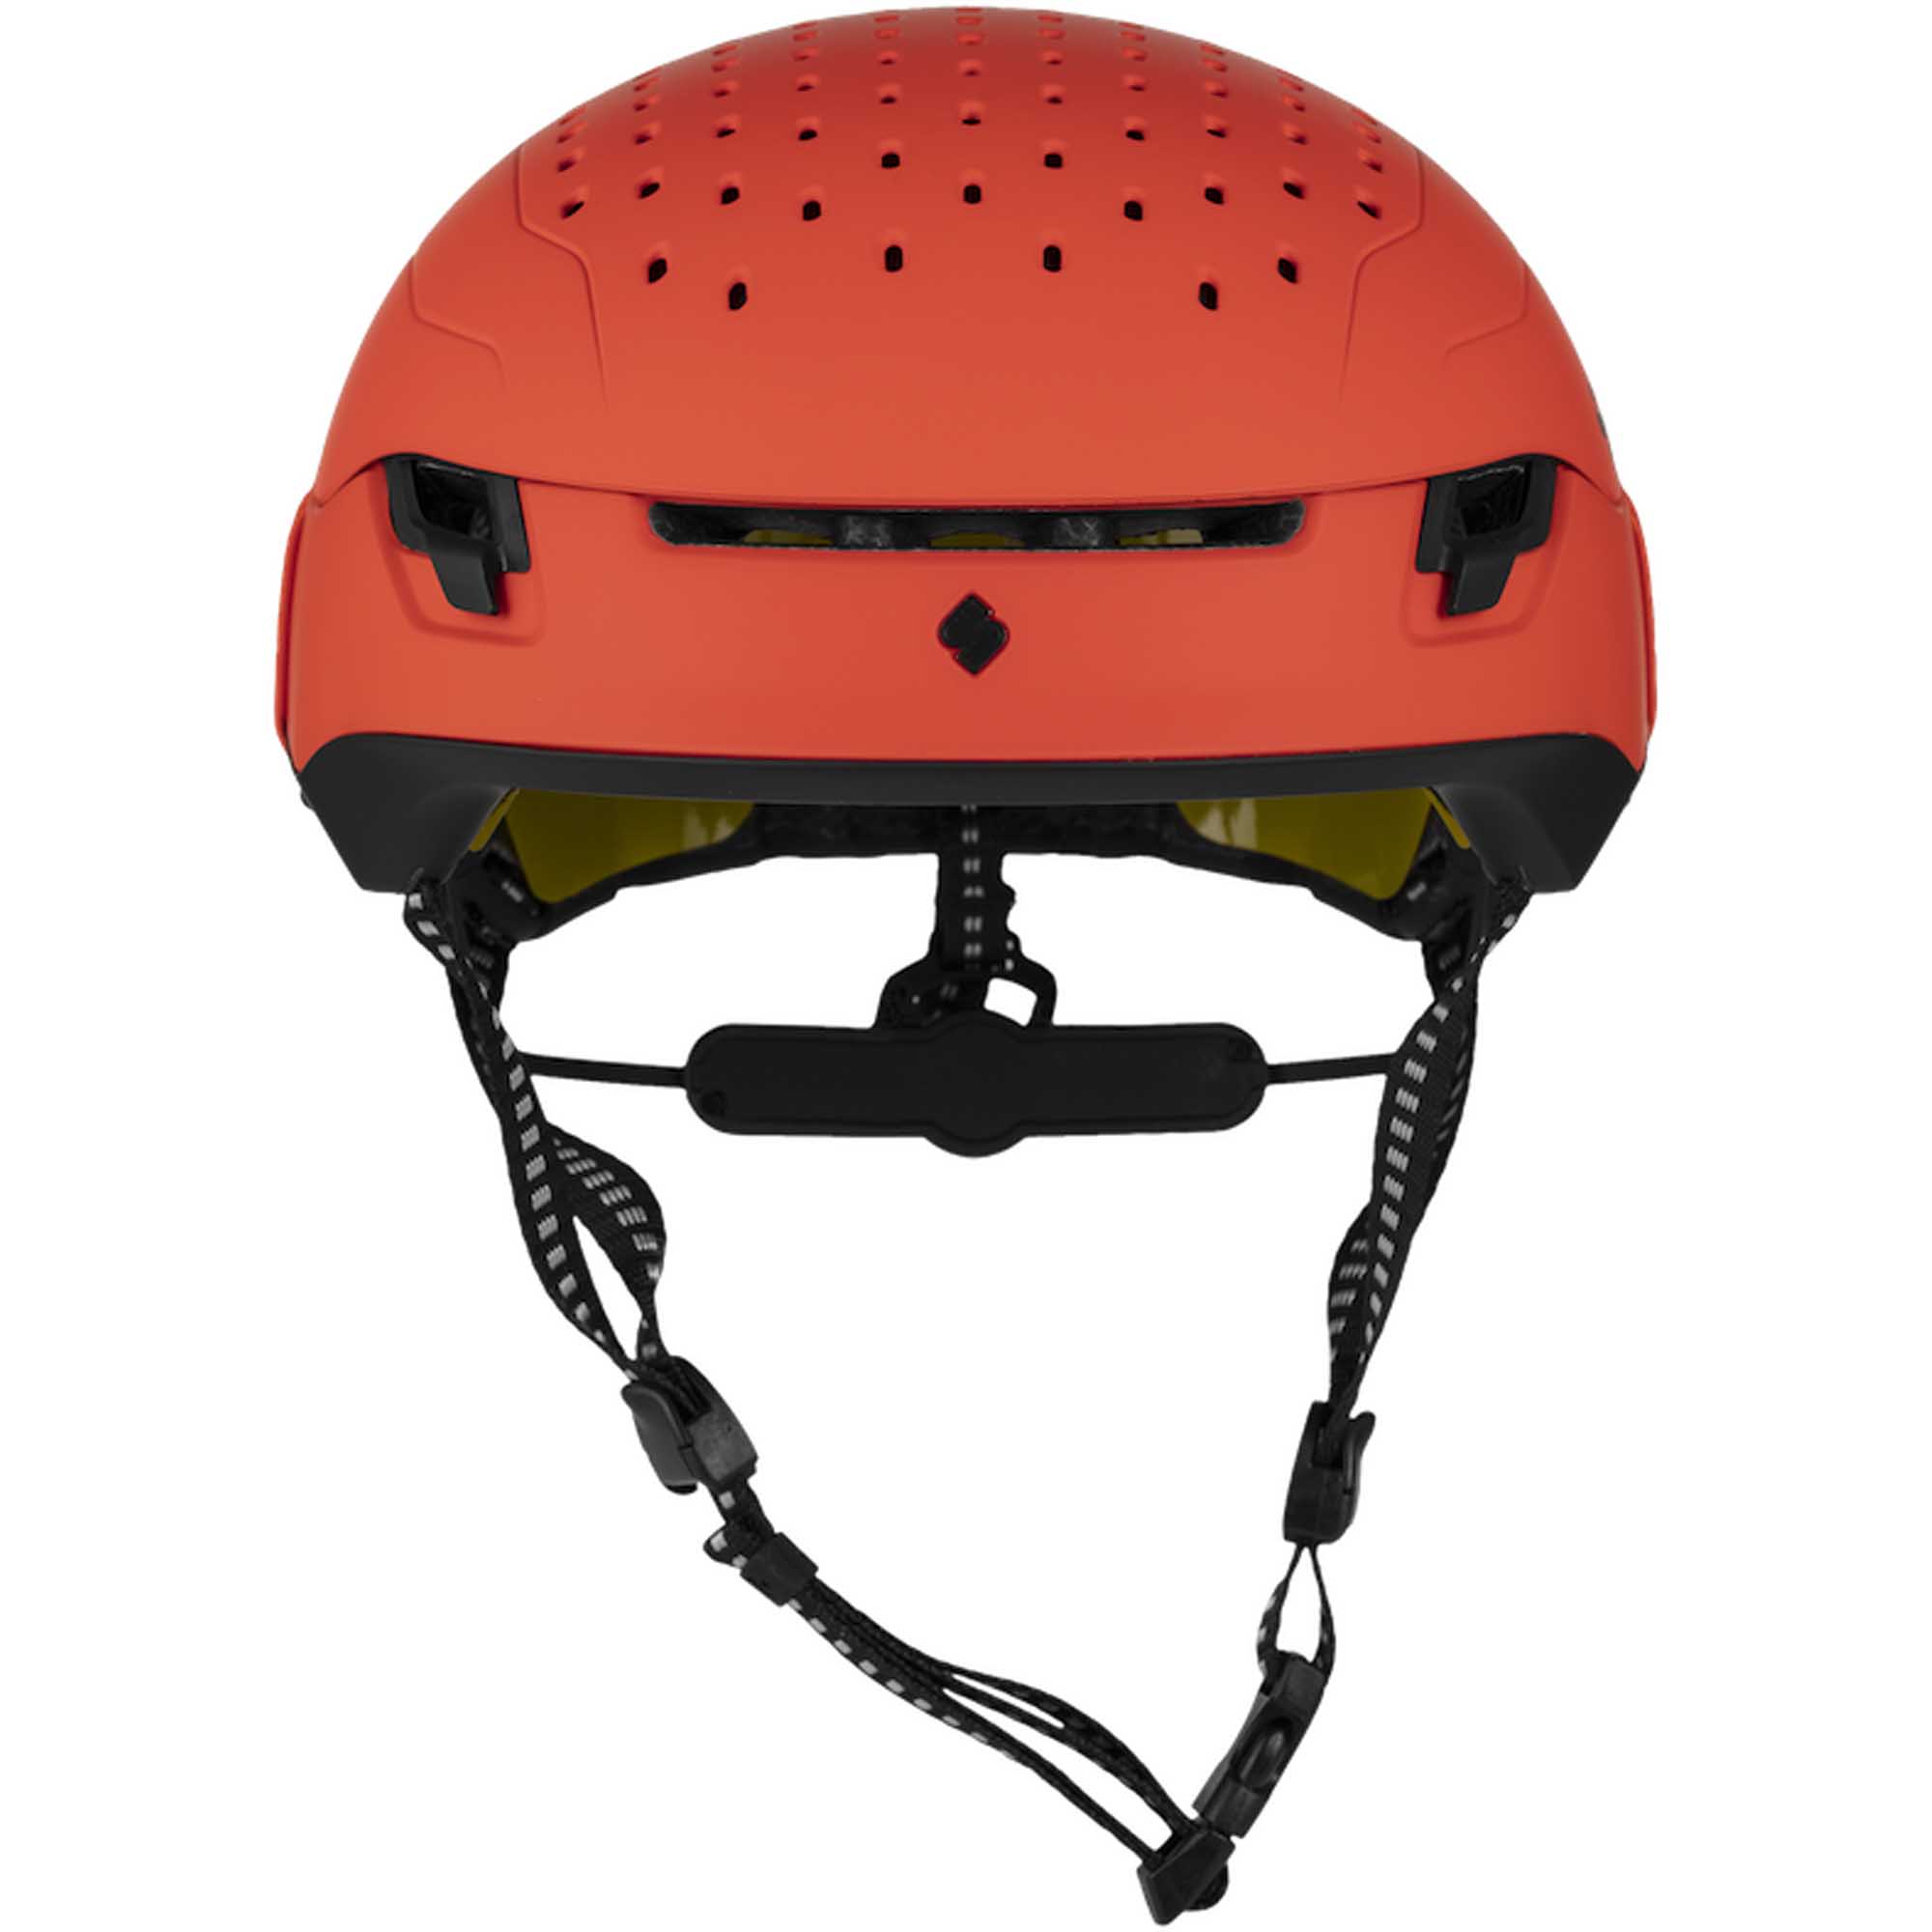 Sweet Protection Ascender MIPS Snowboard/Ski Helmet